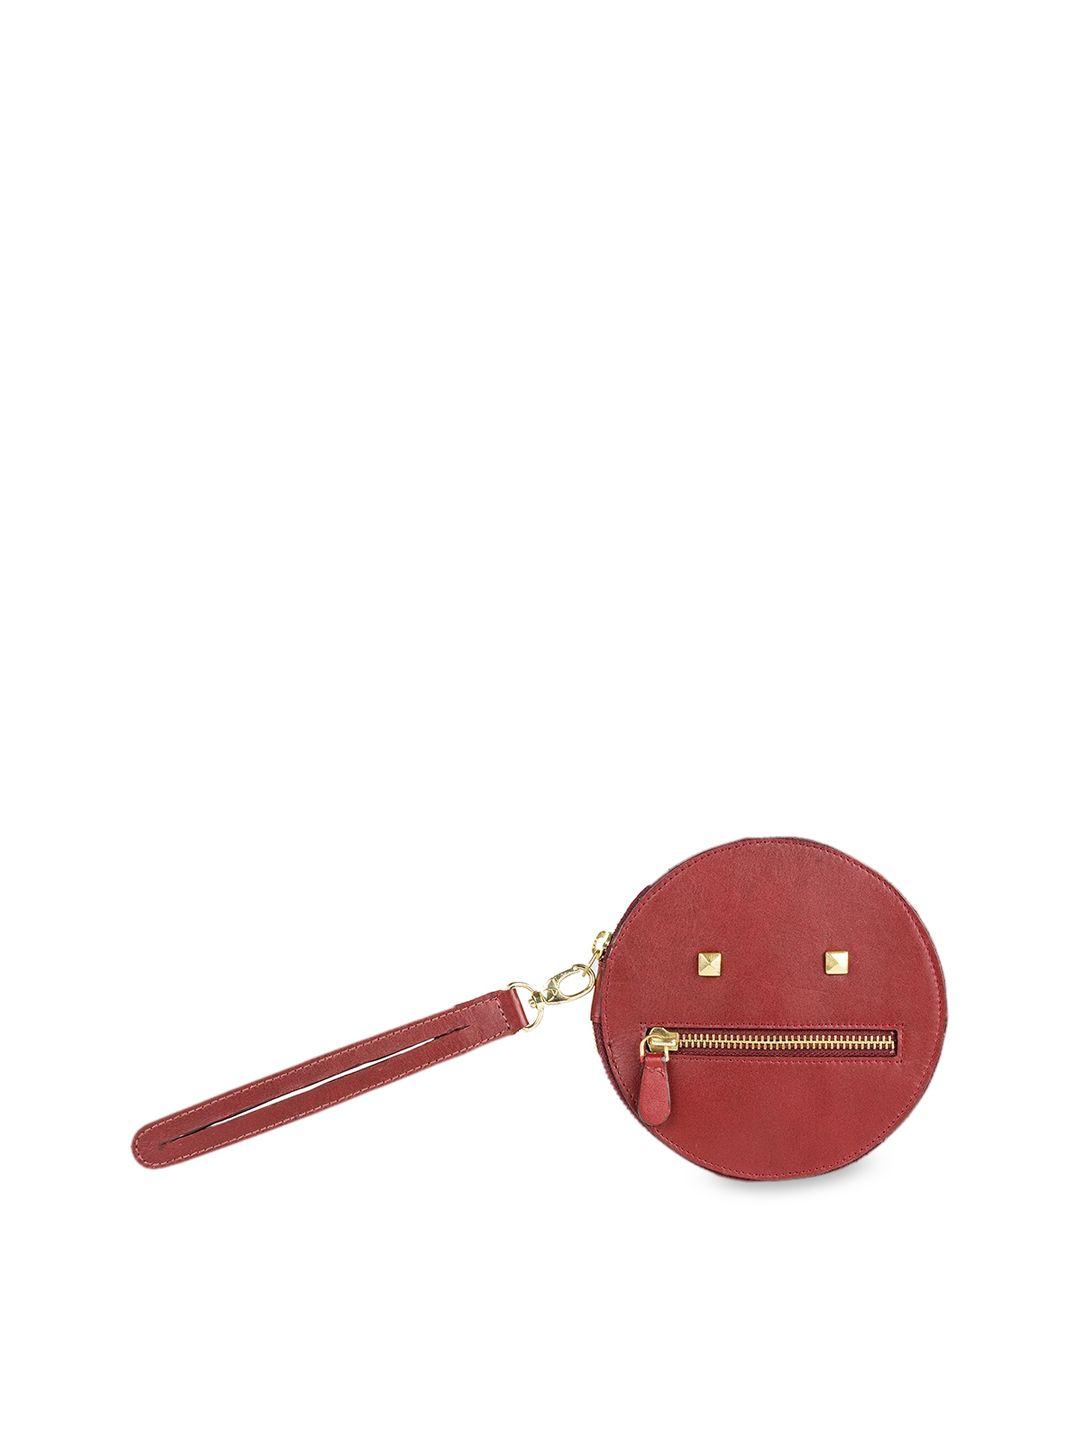 hidesign red circular leather purse clutch